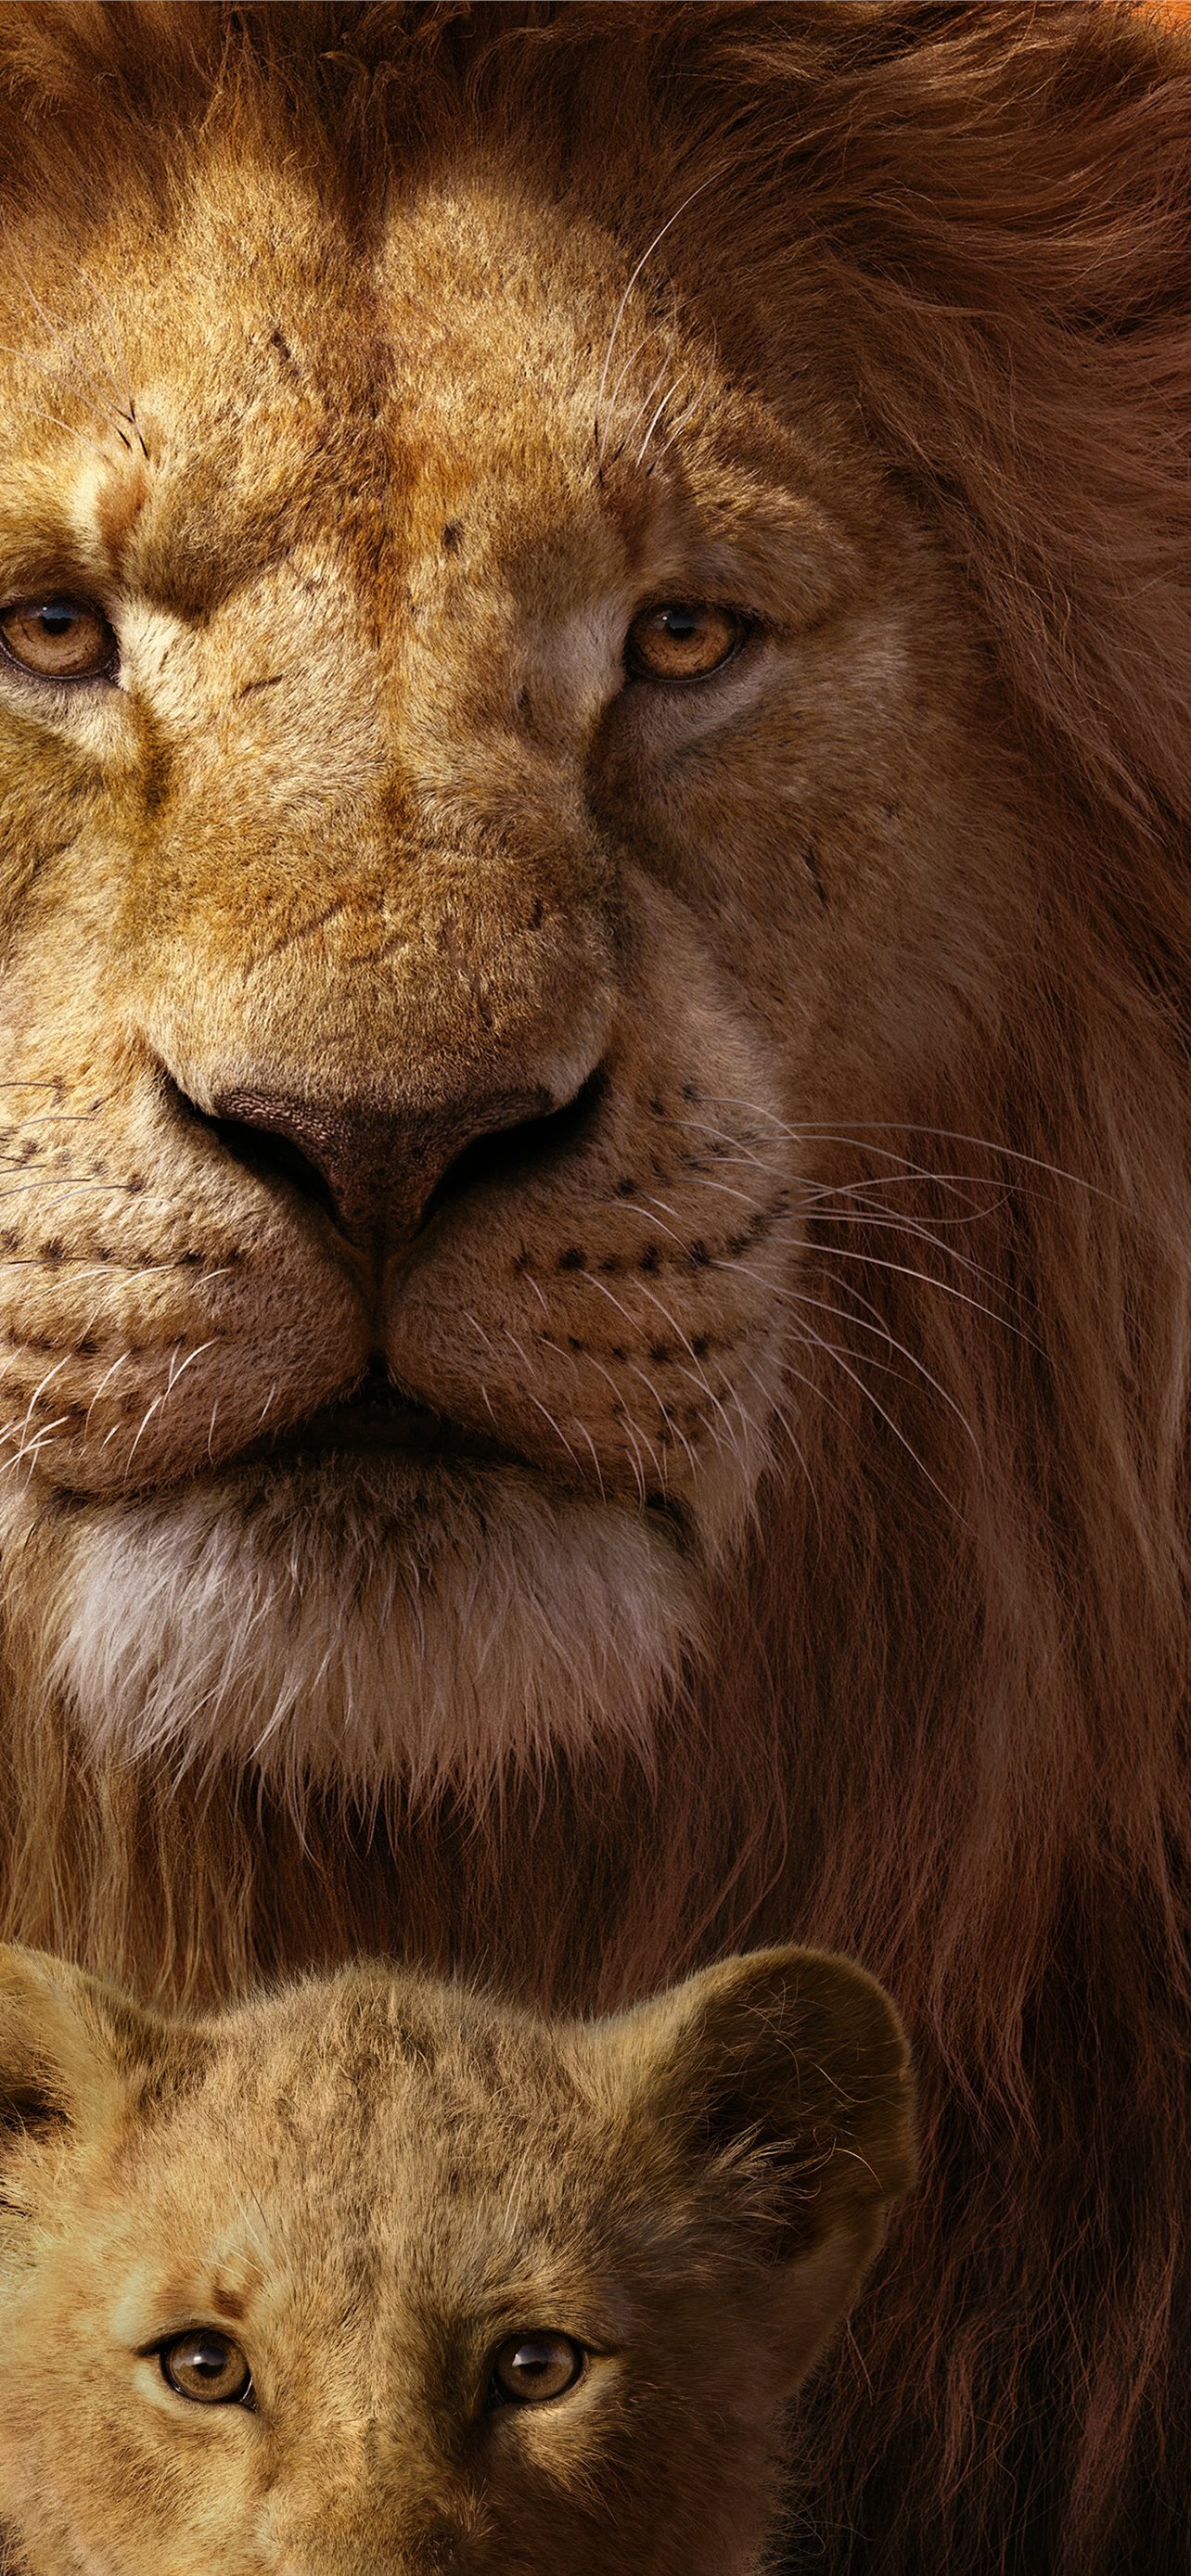 The Lion King Mufasa Simba 8k iPhone Wallpaper